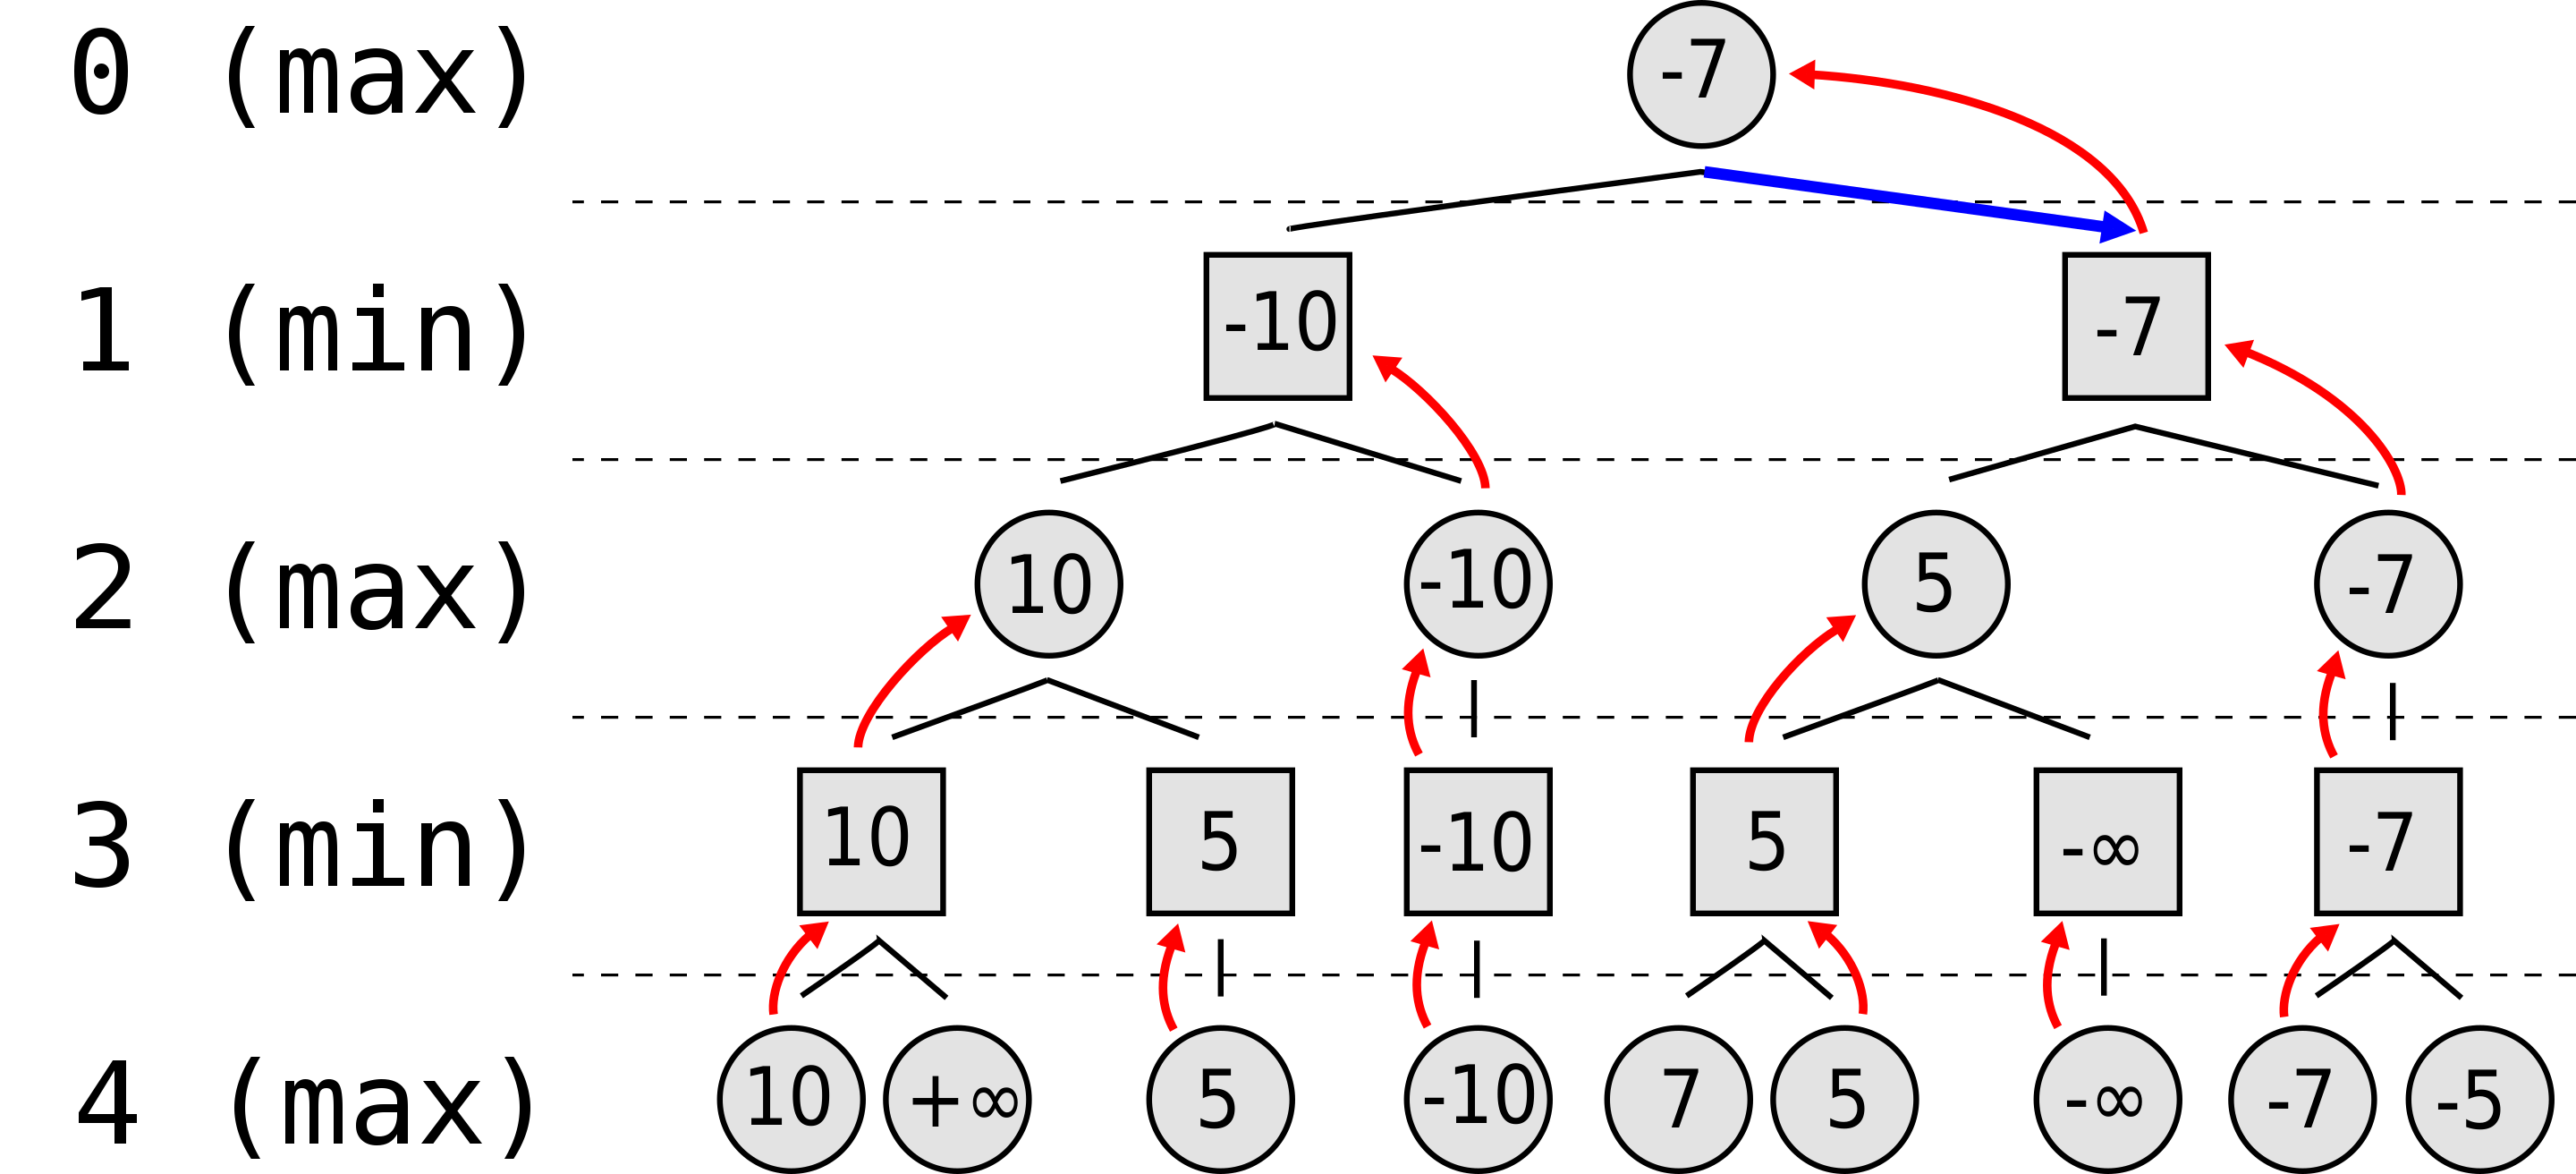 Rook polynomial - Wikipedia